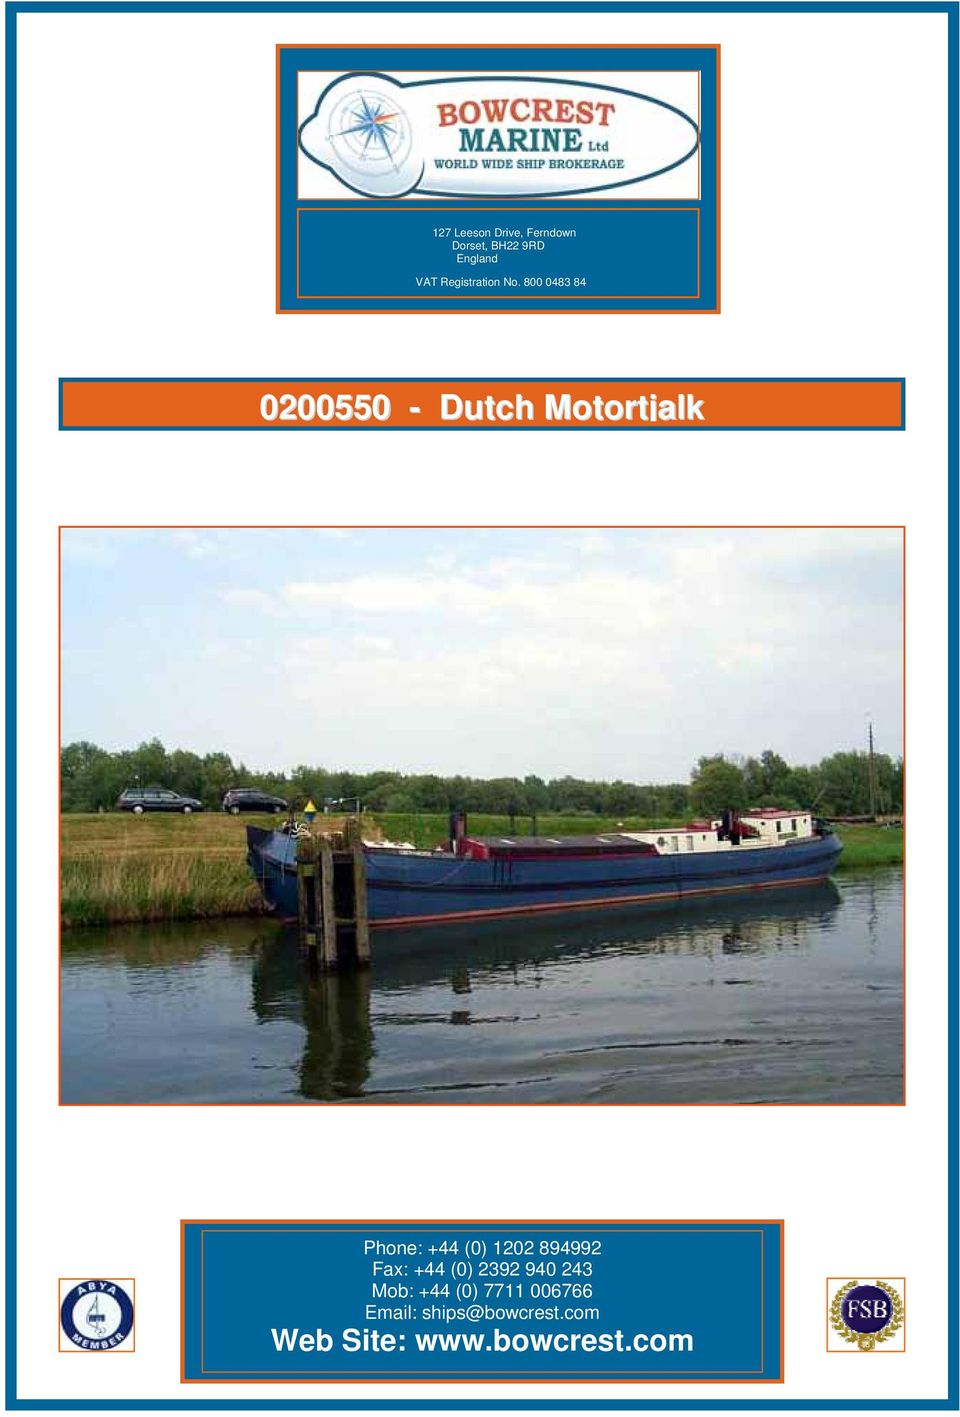 800 0483 84 0200550 - Dutch Motortjalk Phone: +44 (0) 1202